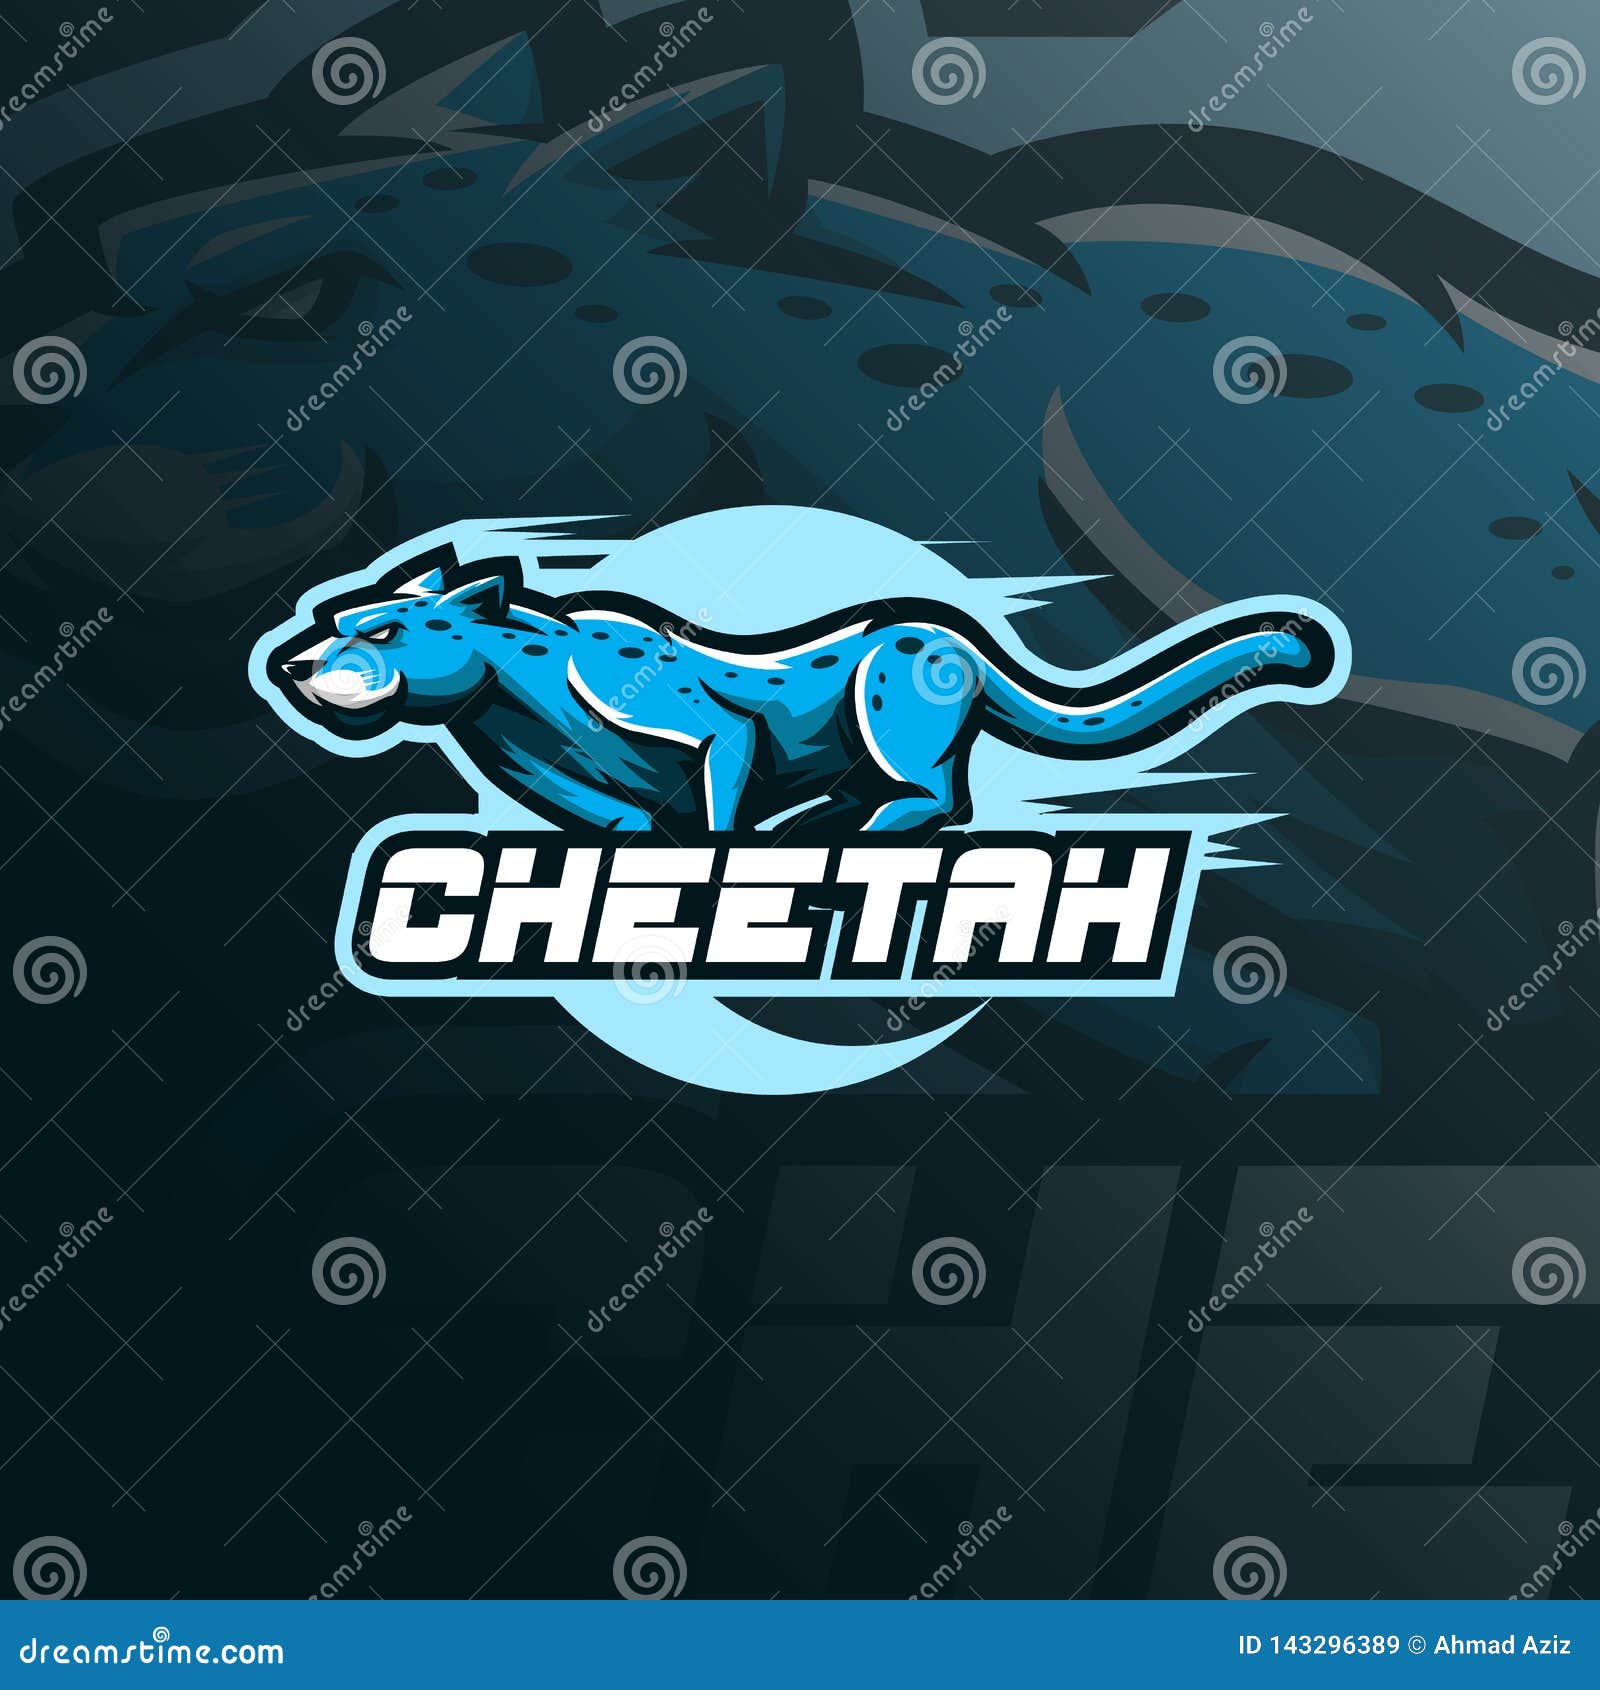 https://thumbs.dreamstime.com/z/cheetah-mascot-logo-design-vector-modern-illustration-concept-style-badge-emblem-tshirt-printing-angry-cheetah-143296389.jpg